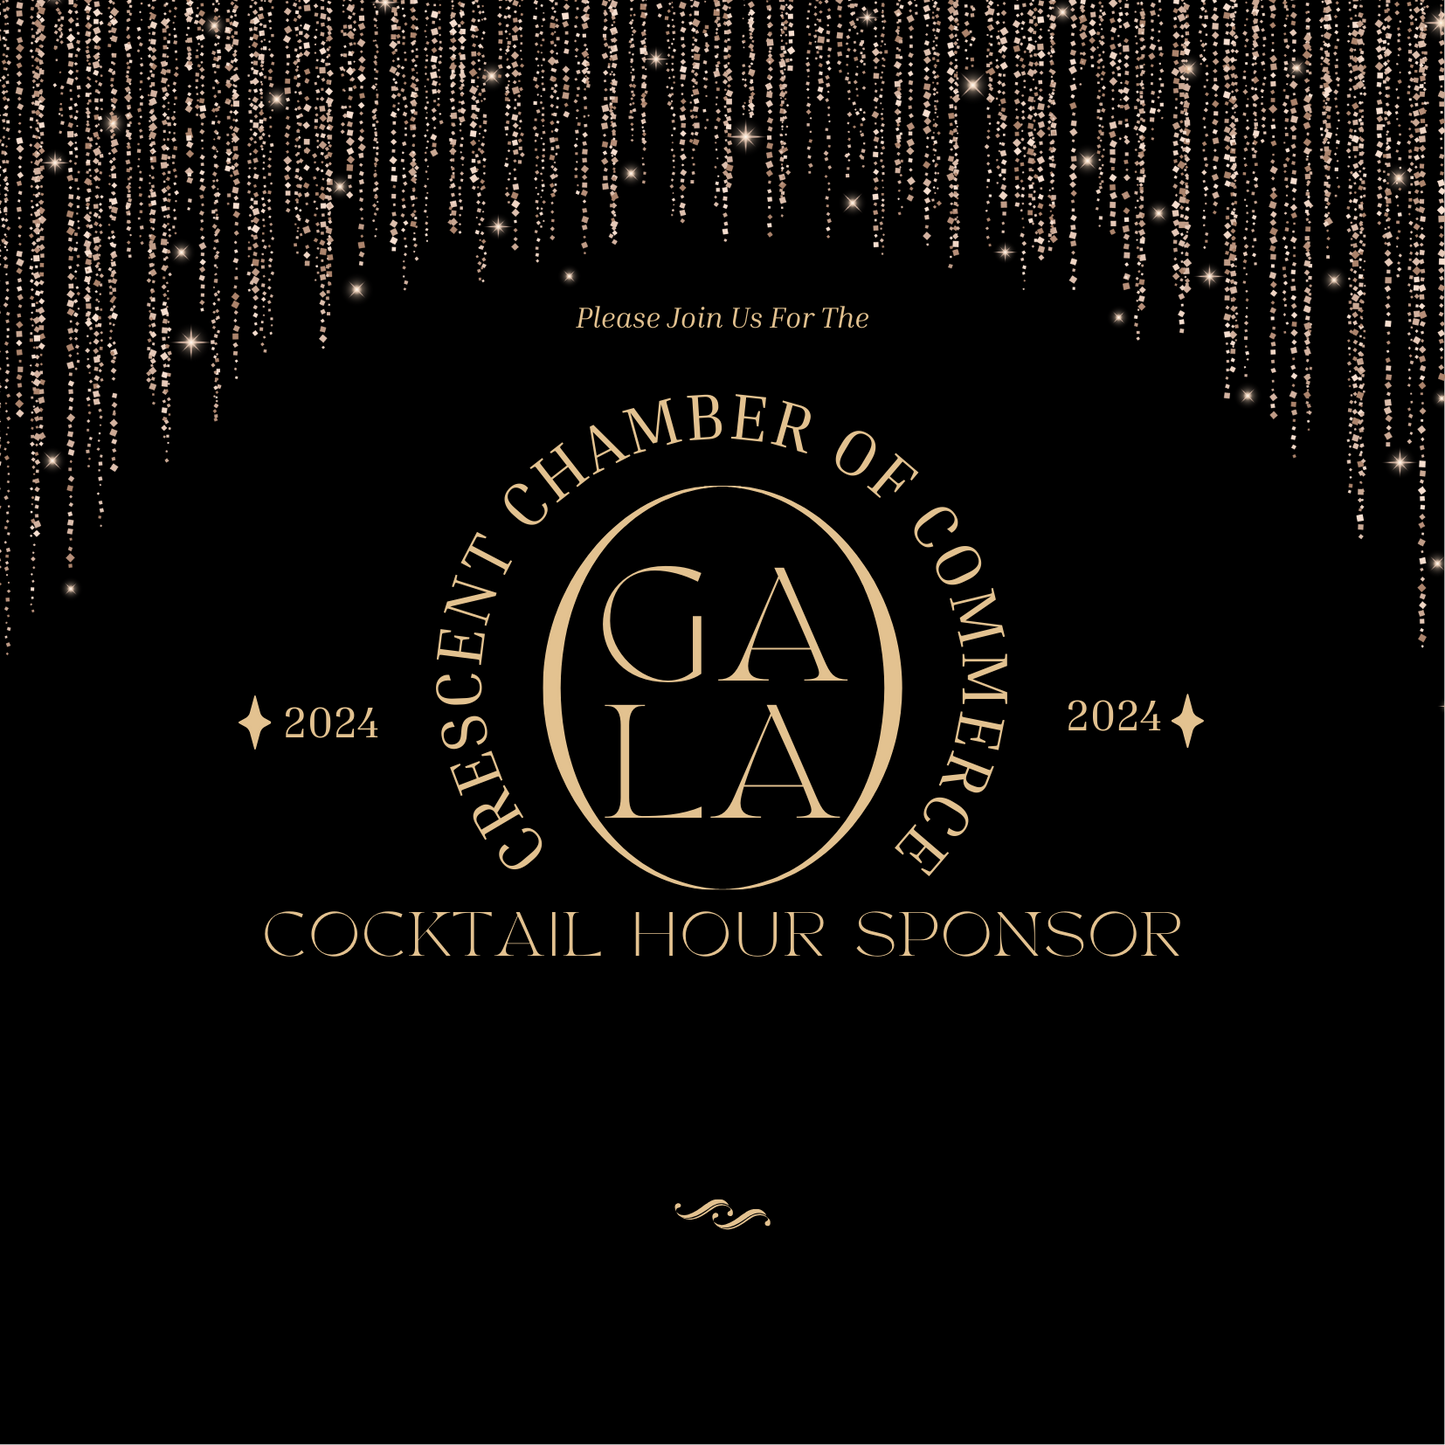 Chamber Gala Cocktail Hour Sponsor